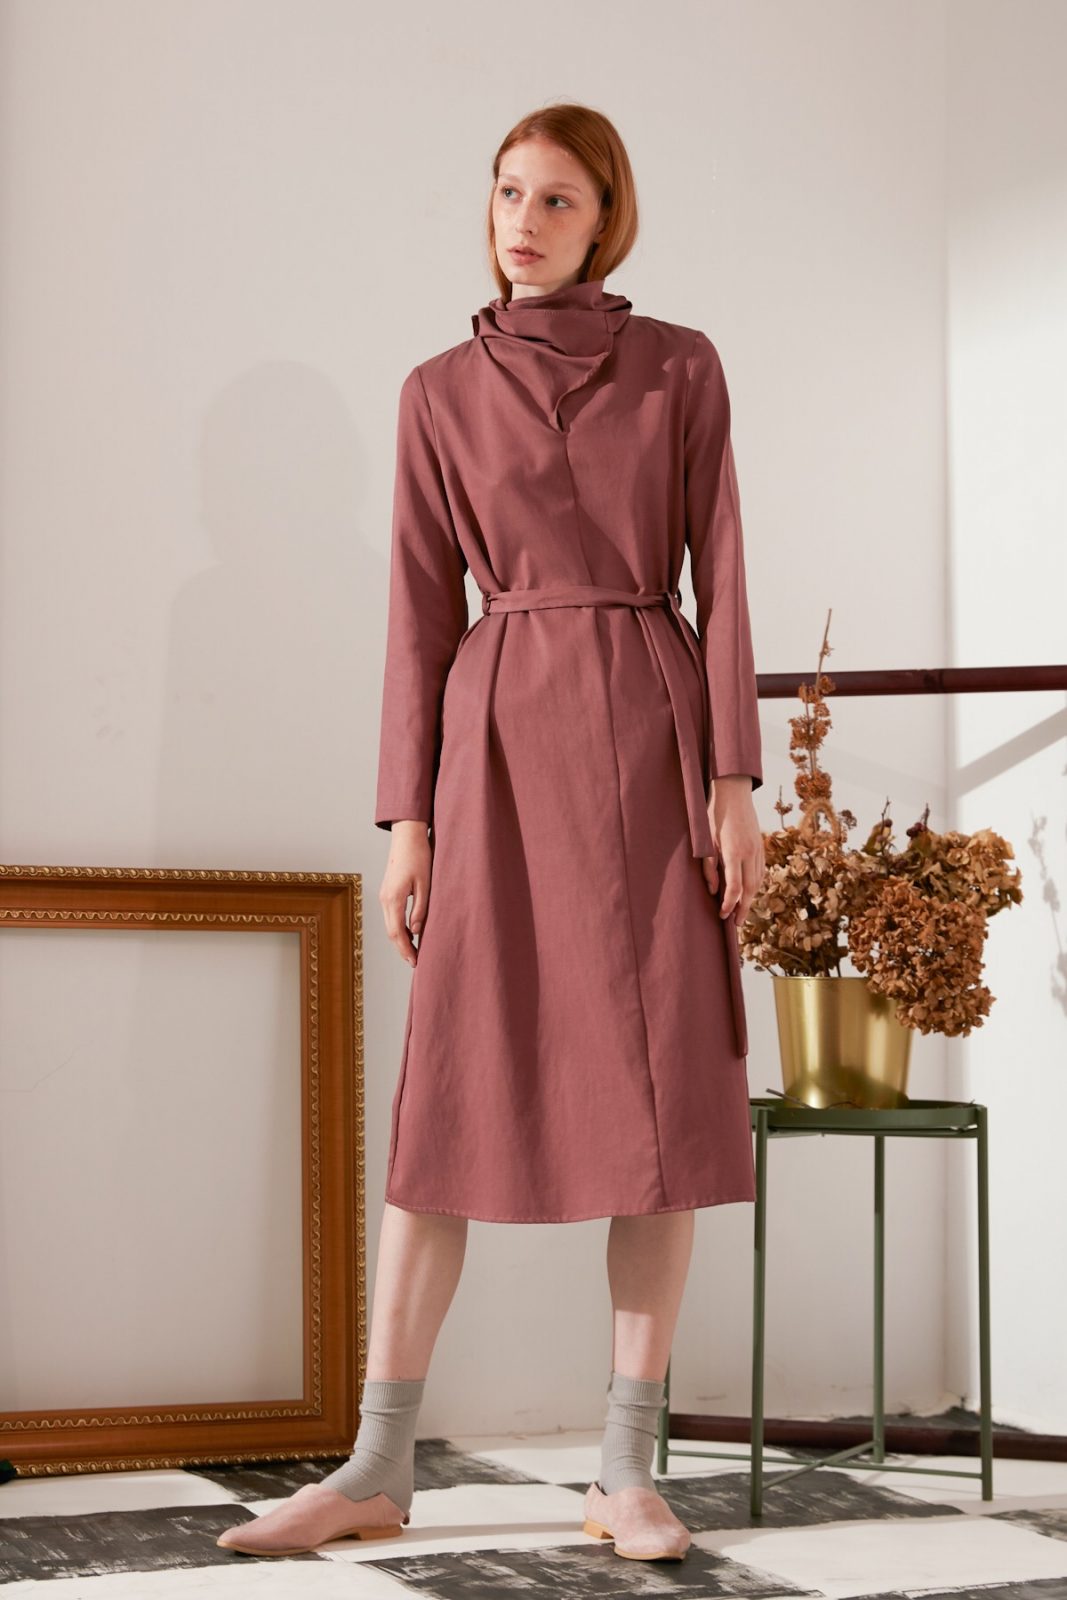 SKYE modern minimalist women fashion long sleeve asymmetrical high collar dress maroon ethical sustainable